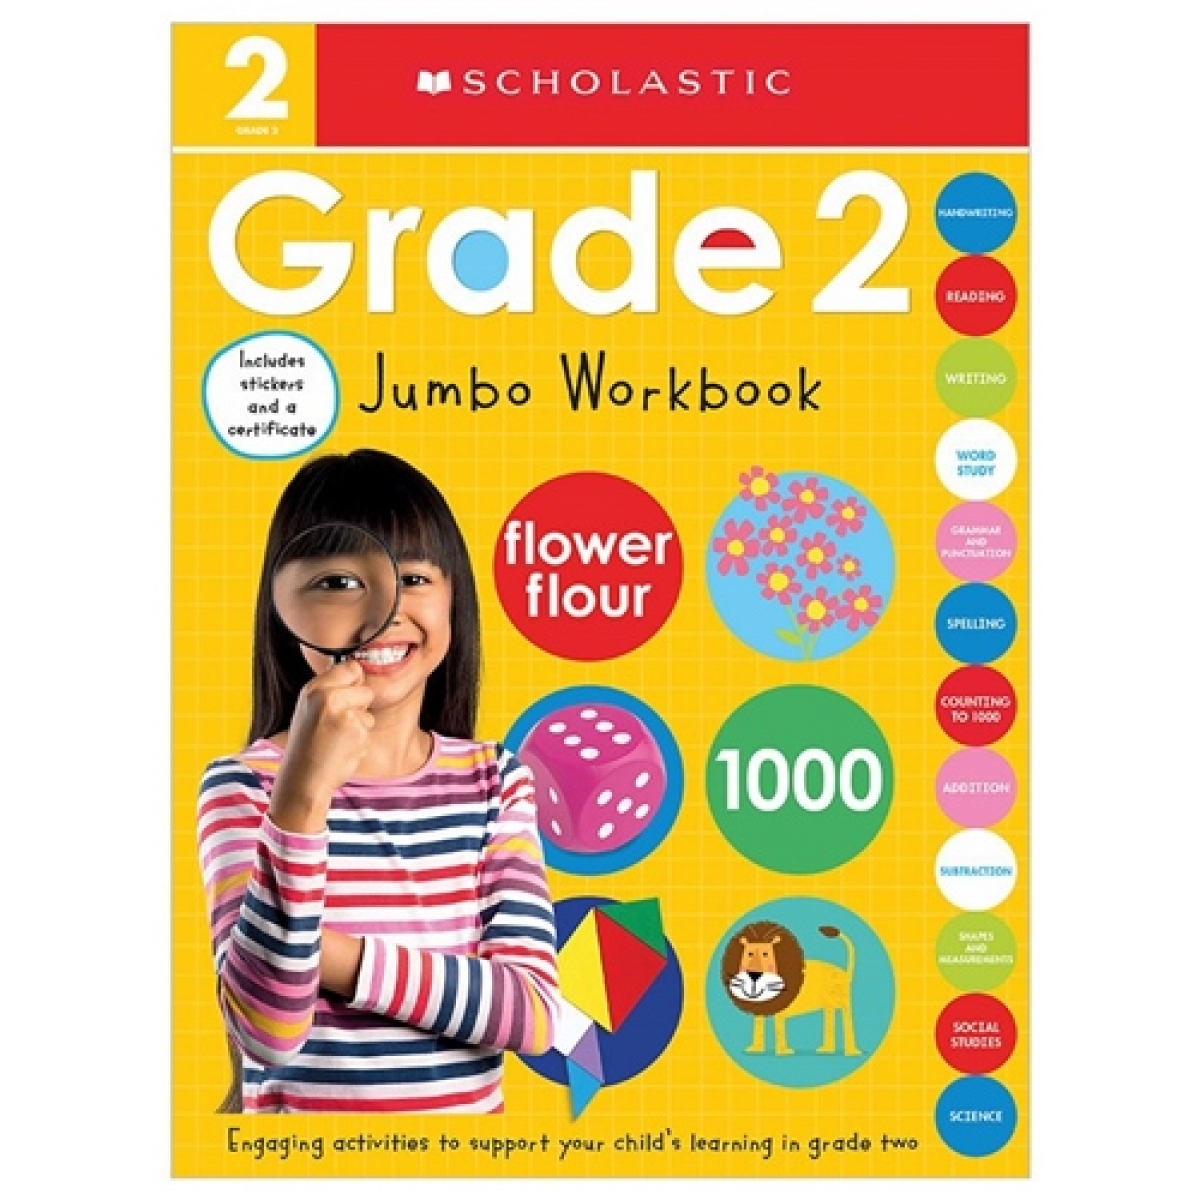 Jumbo Workbook: Second Grade 